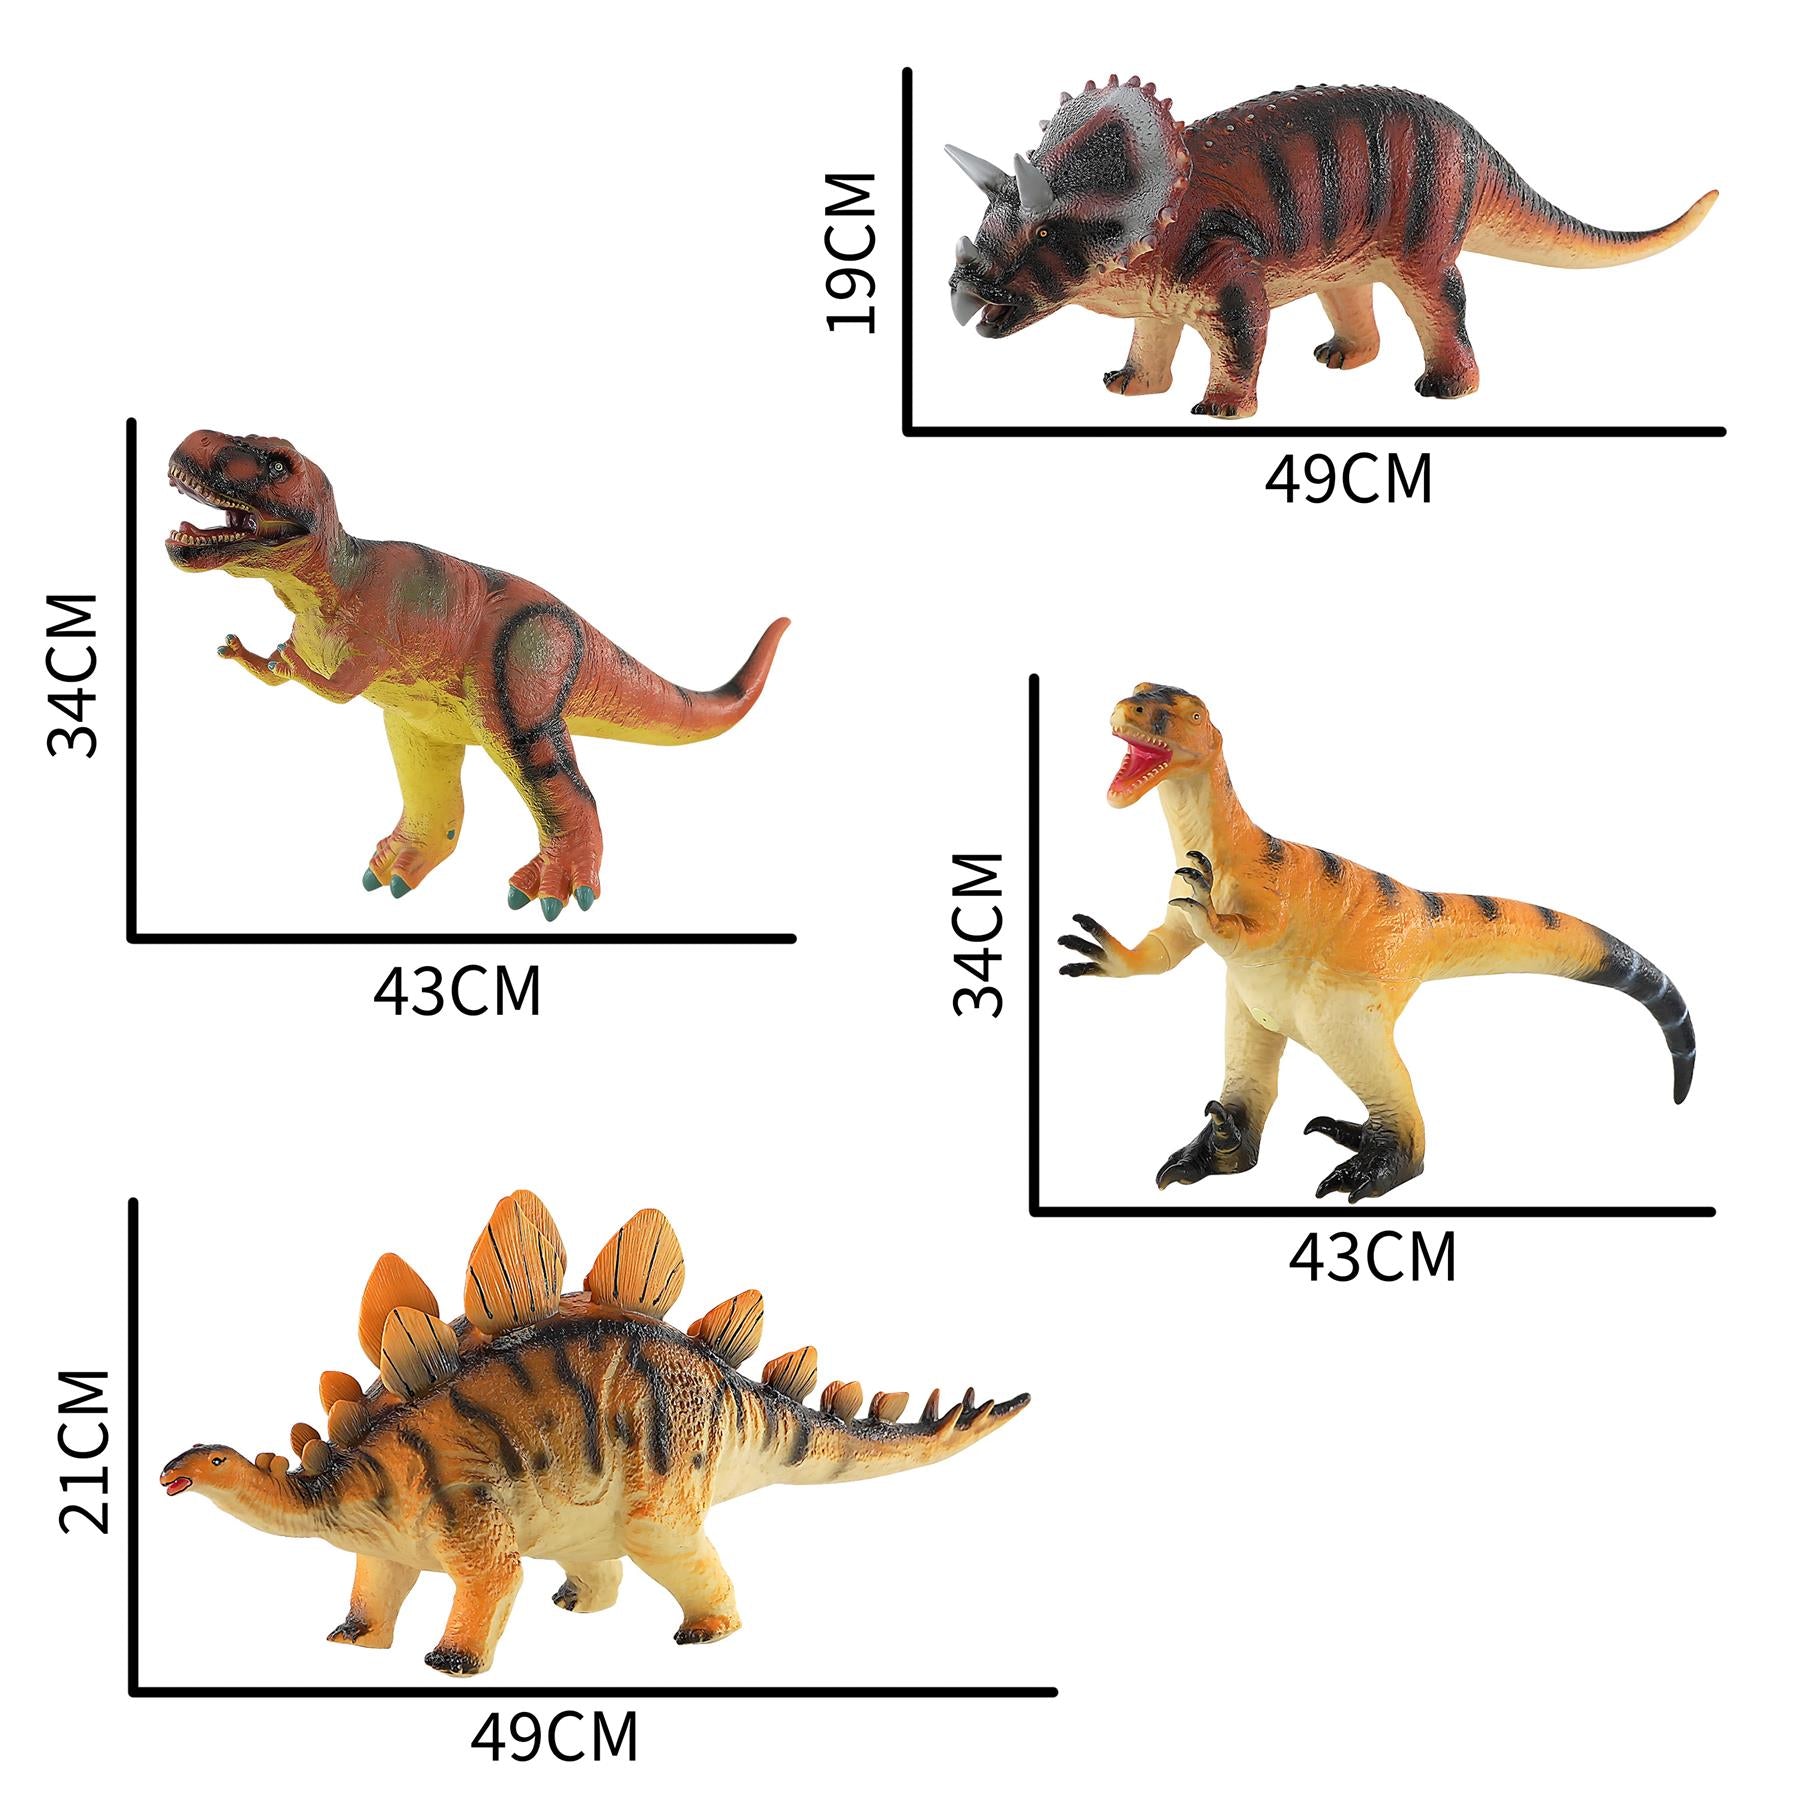 Large Dinosaurs Figures Set of 4 by The Magic Toy Shop - UKBuyZone